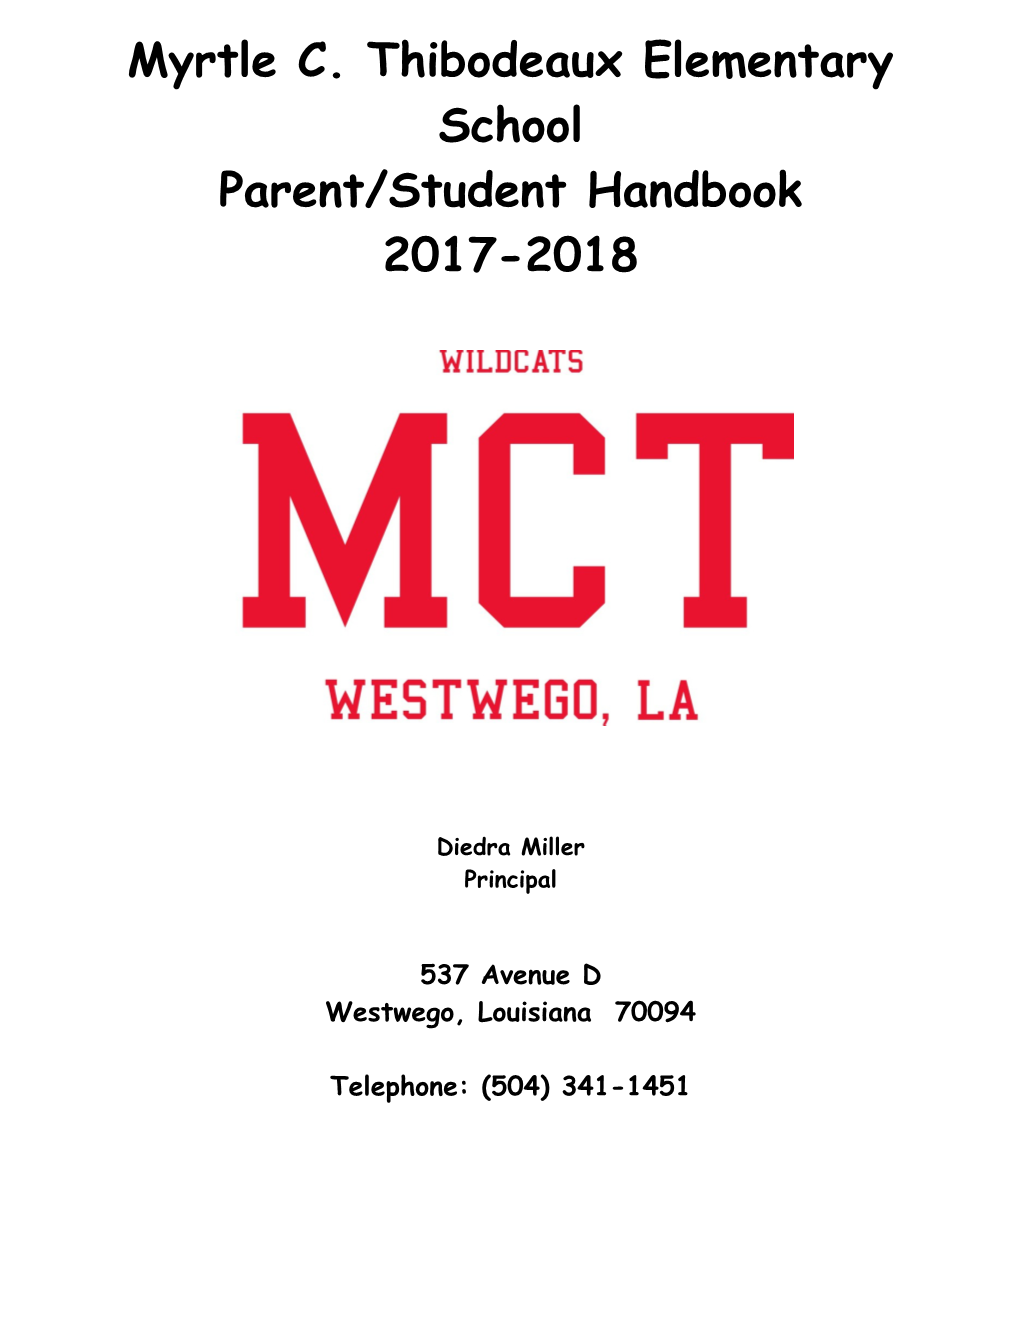 Myrtle C. Thibodeaux Elementary School 2017-2018 Parent-Scholar Handbook